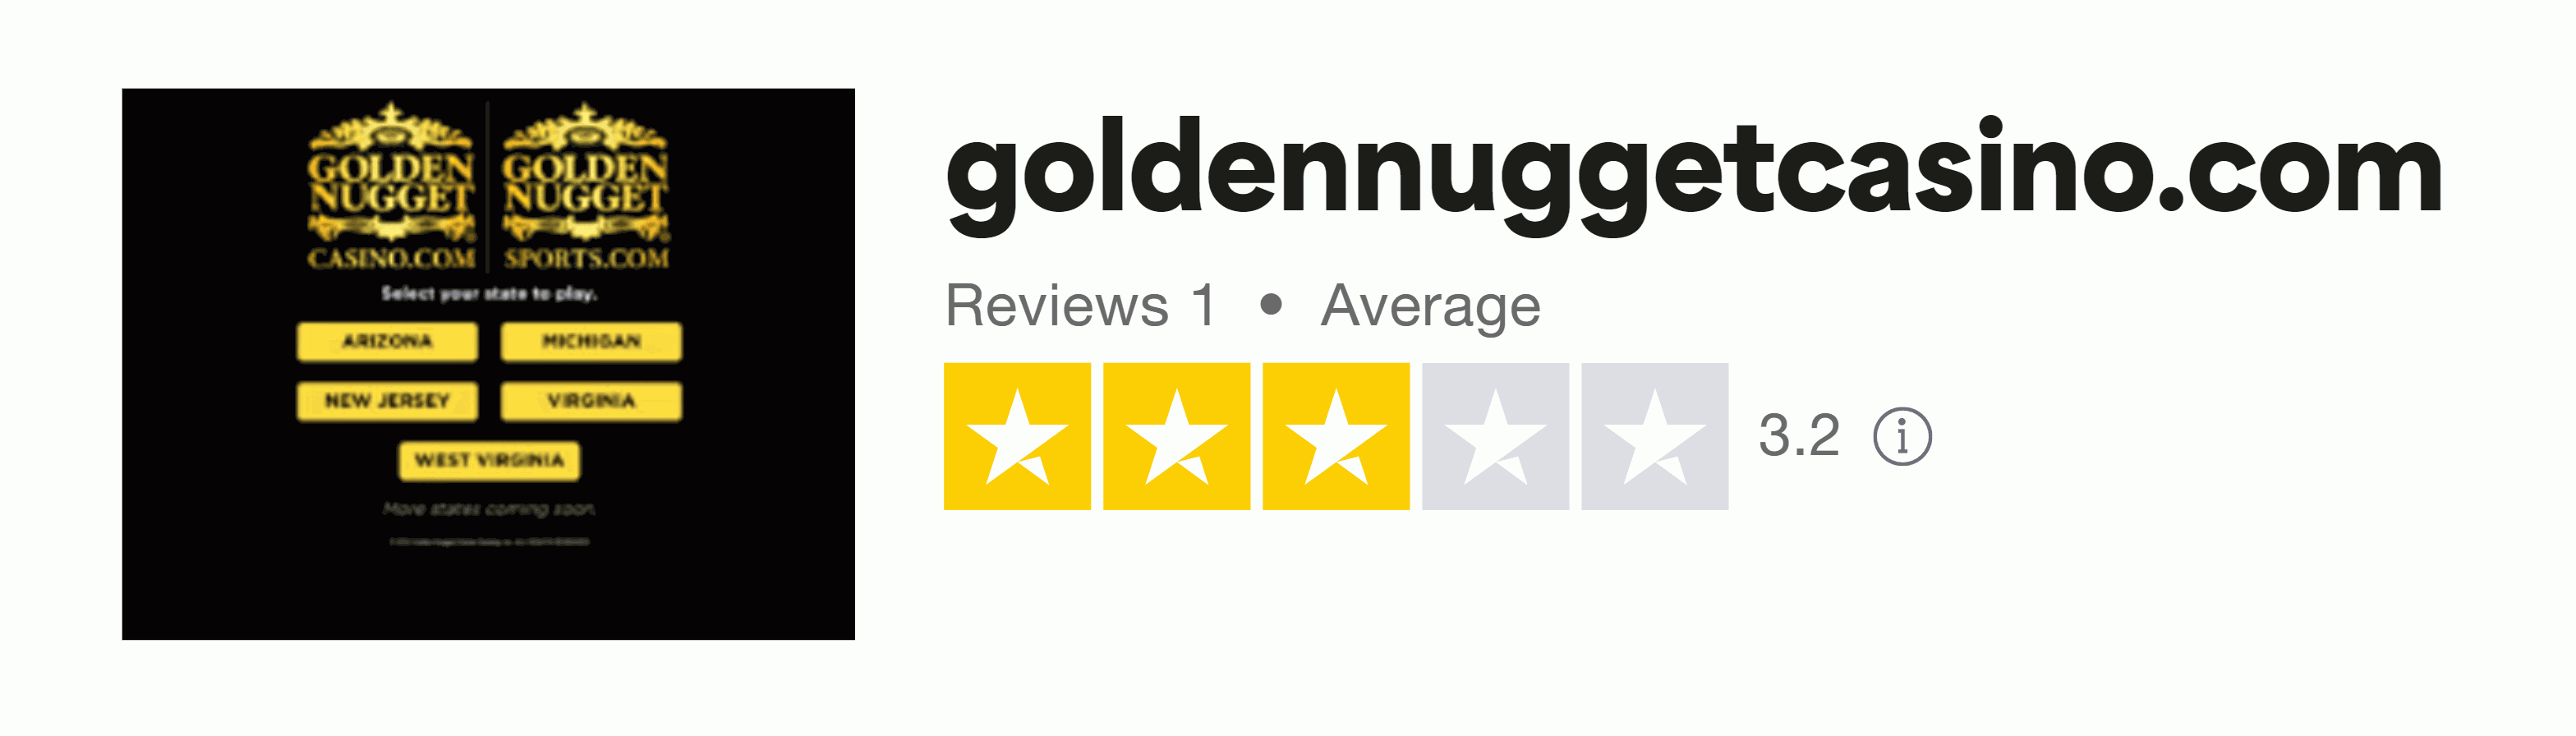 Trustpilot rating screenshot for the Golden Nugget MI